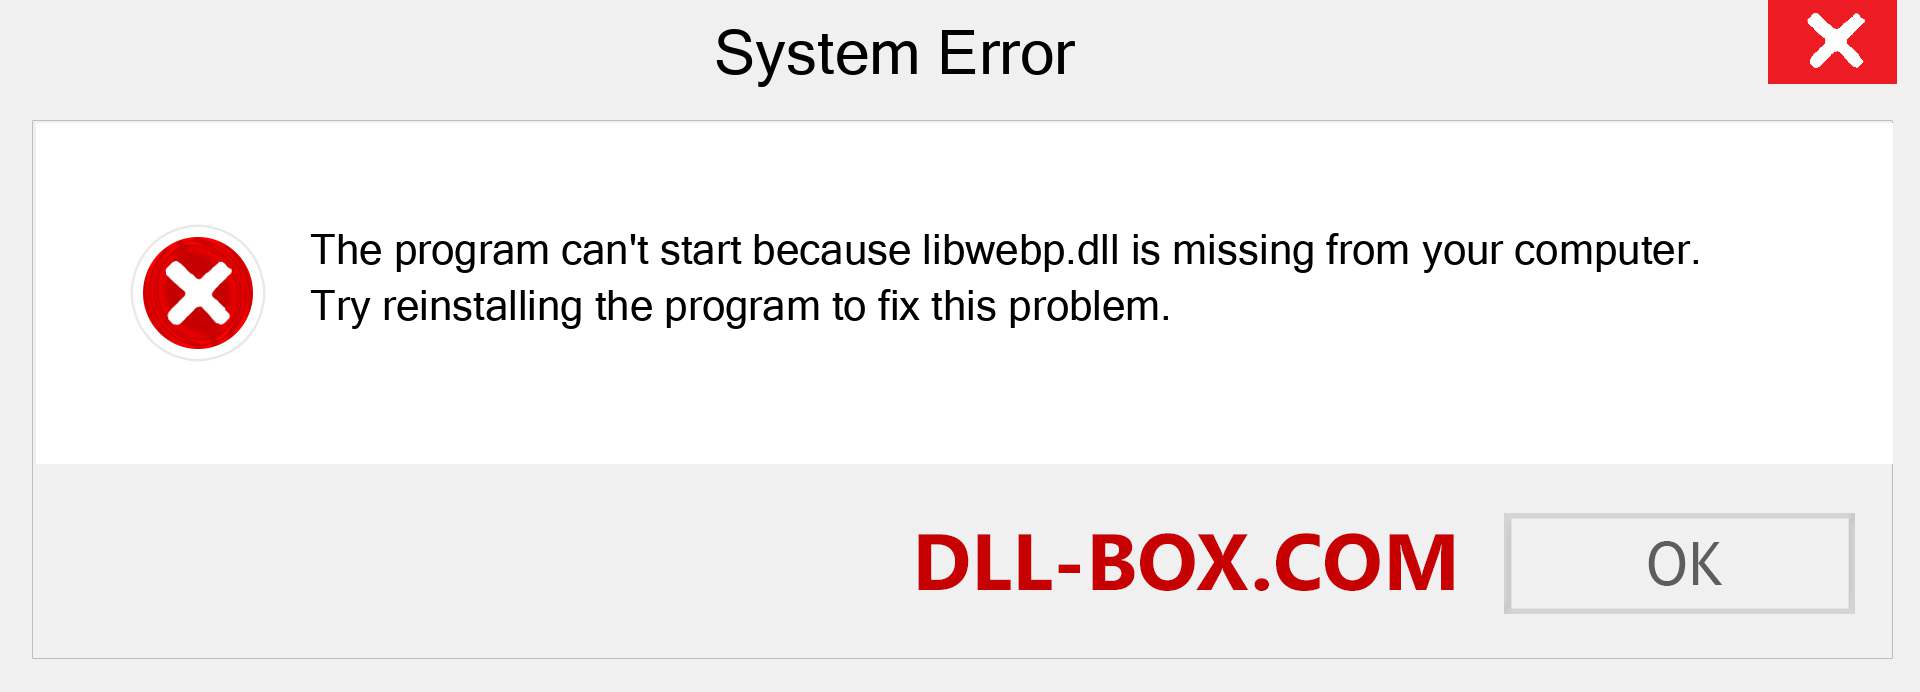  libwebp.dll file is missing?. Download for Windows 7, 8, 10 - Fix  libwebp dll Missing Error on Windows, photos, images